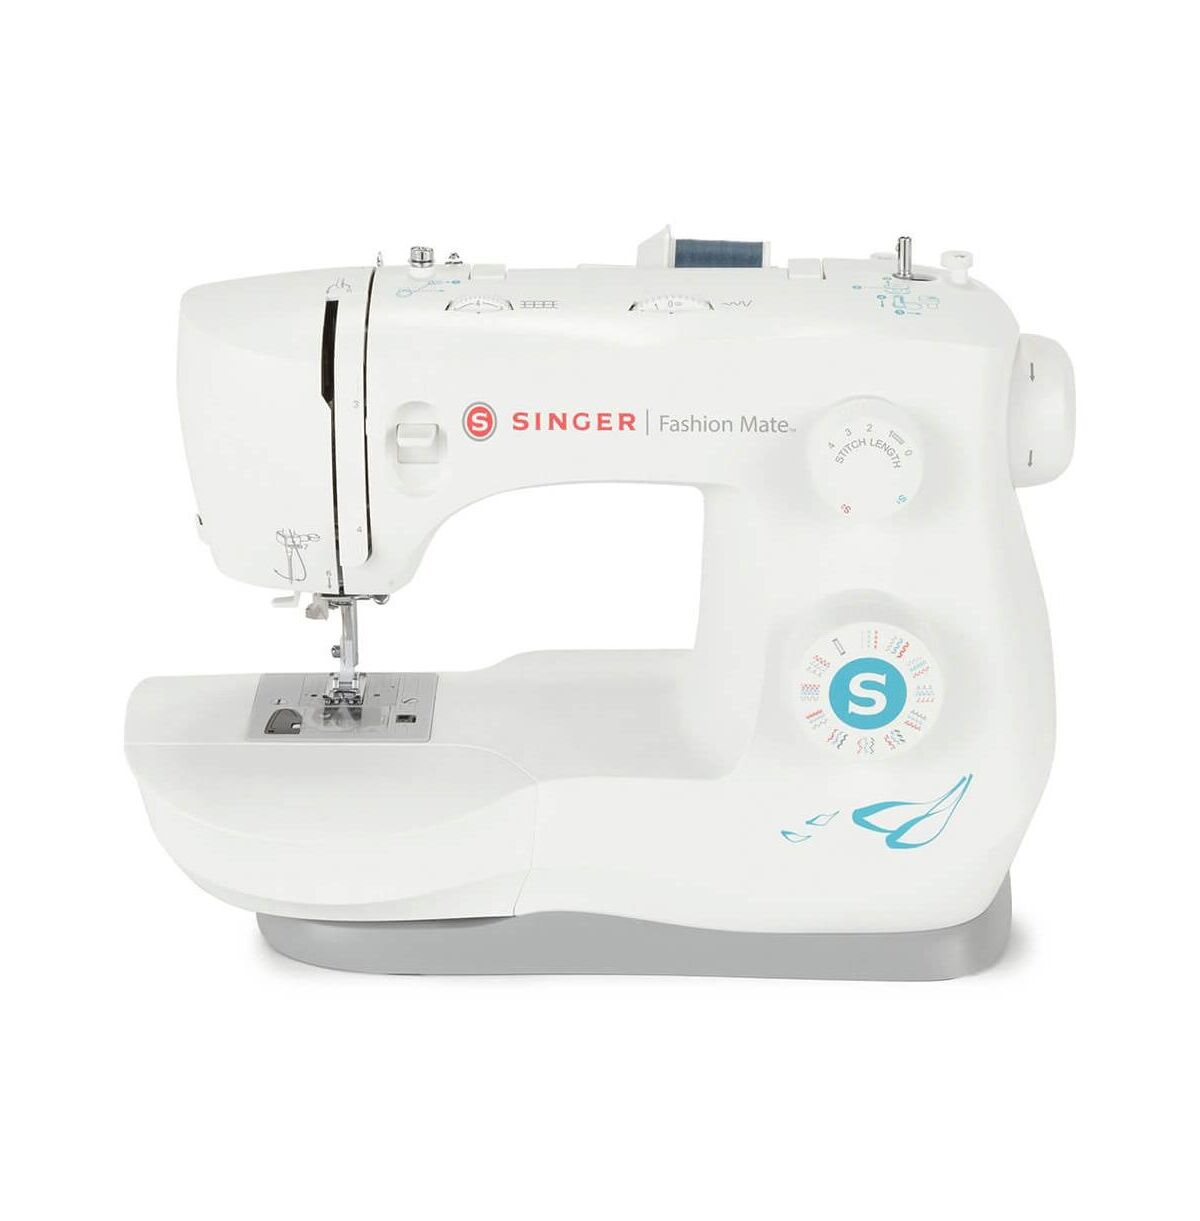 Singer Fashion Mate Sewing Machine - White